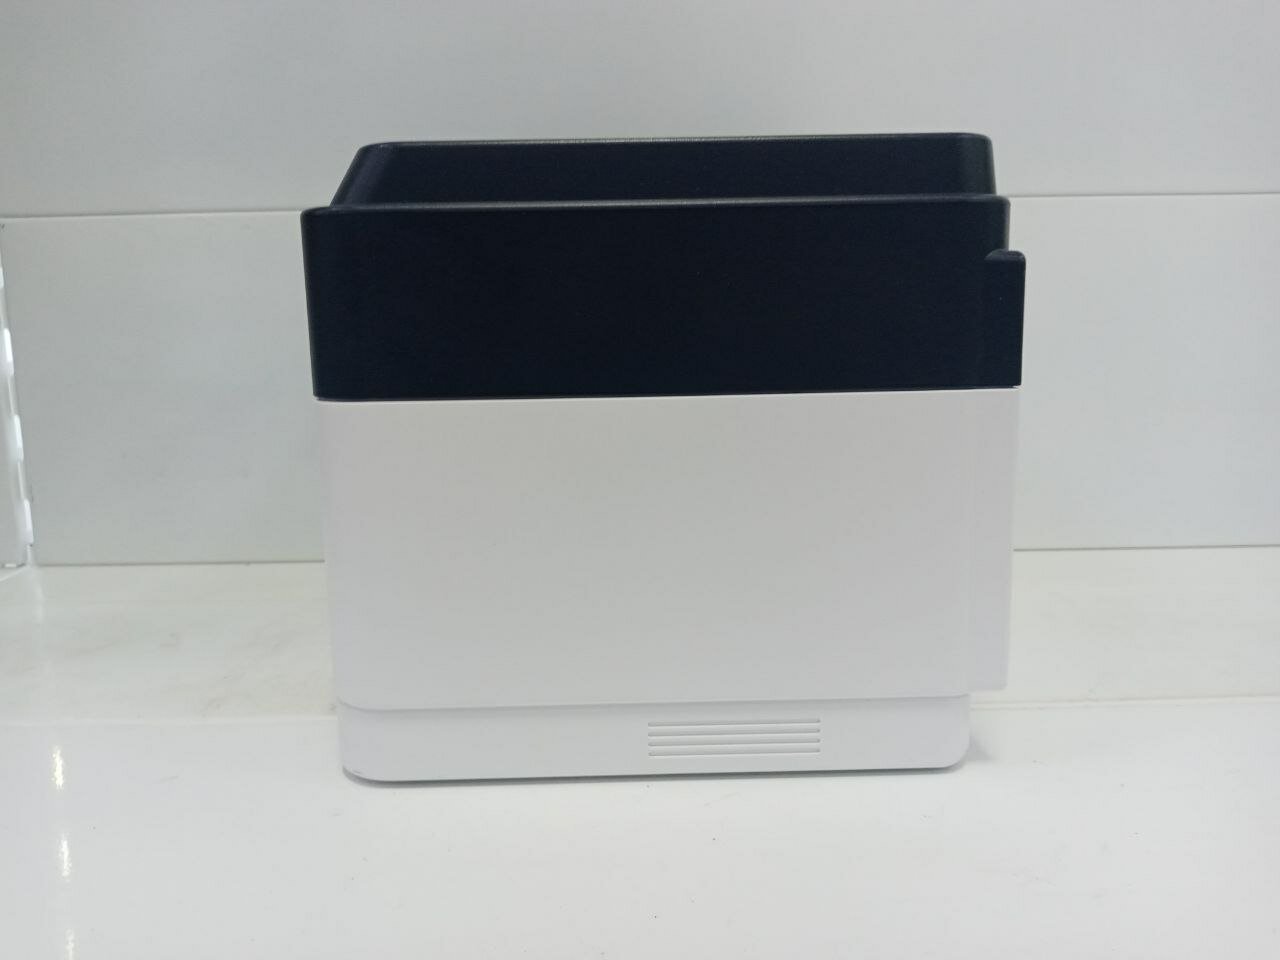 Принтер лазерный KYOCERA FS-1040 ч/б A4